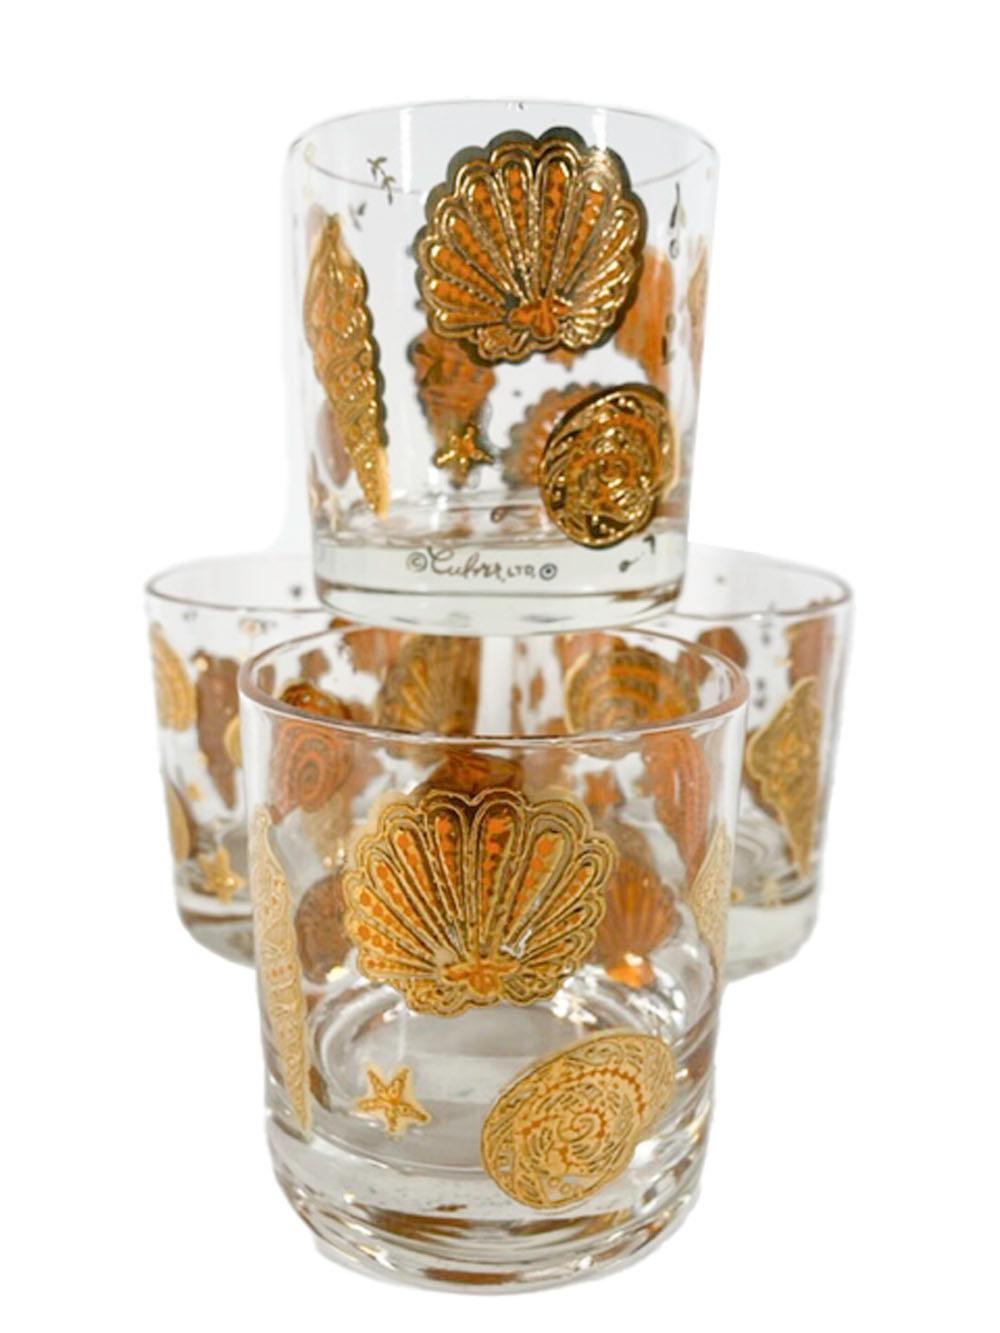 Four Mid-Century Modern rocks glasses in Marina pattern by Culver, having various seashells in heaped orange enamel and 22 karat gold creating a raised textured design.